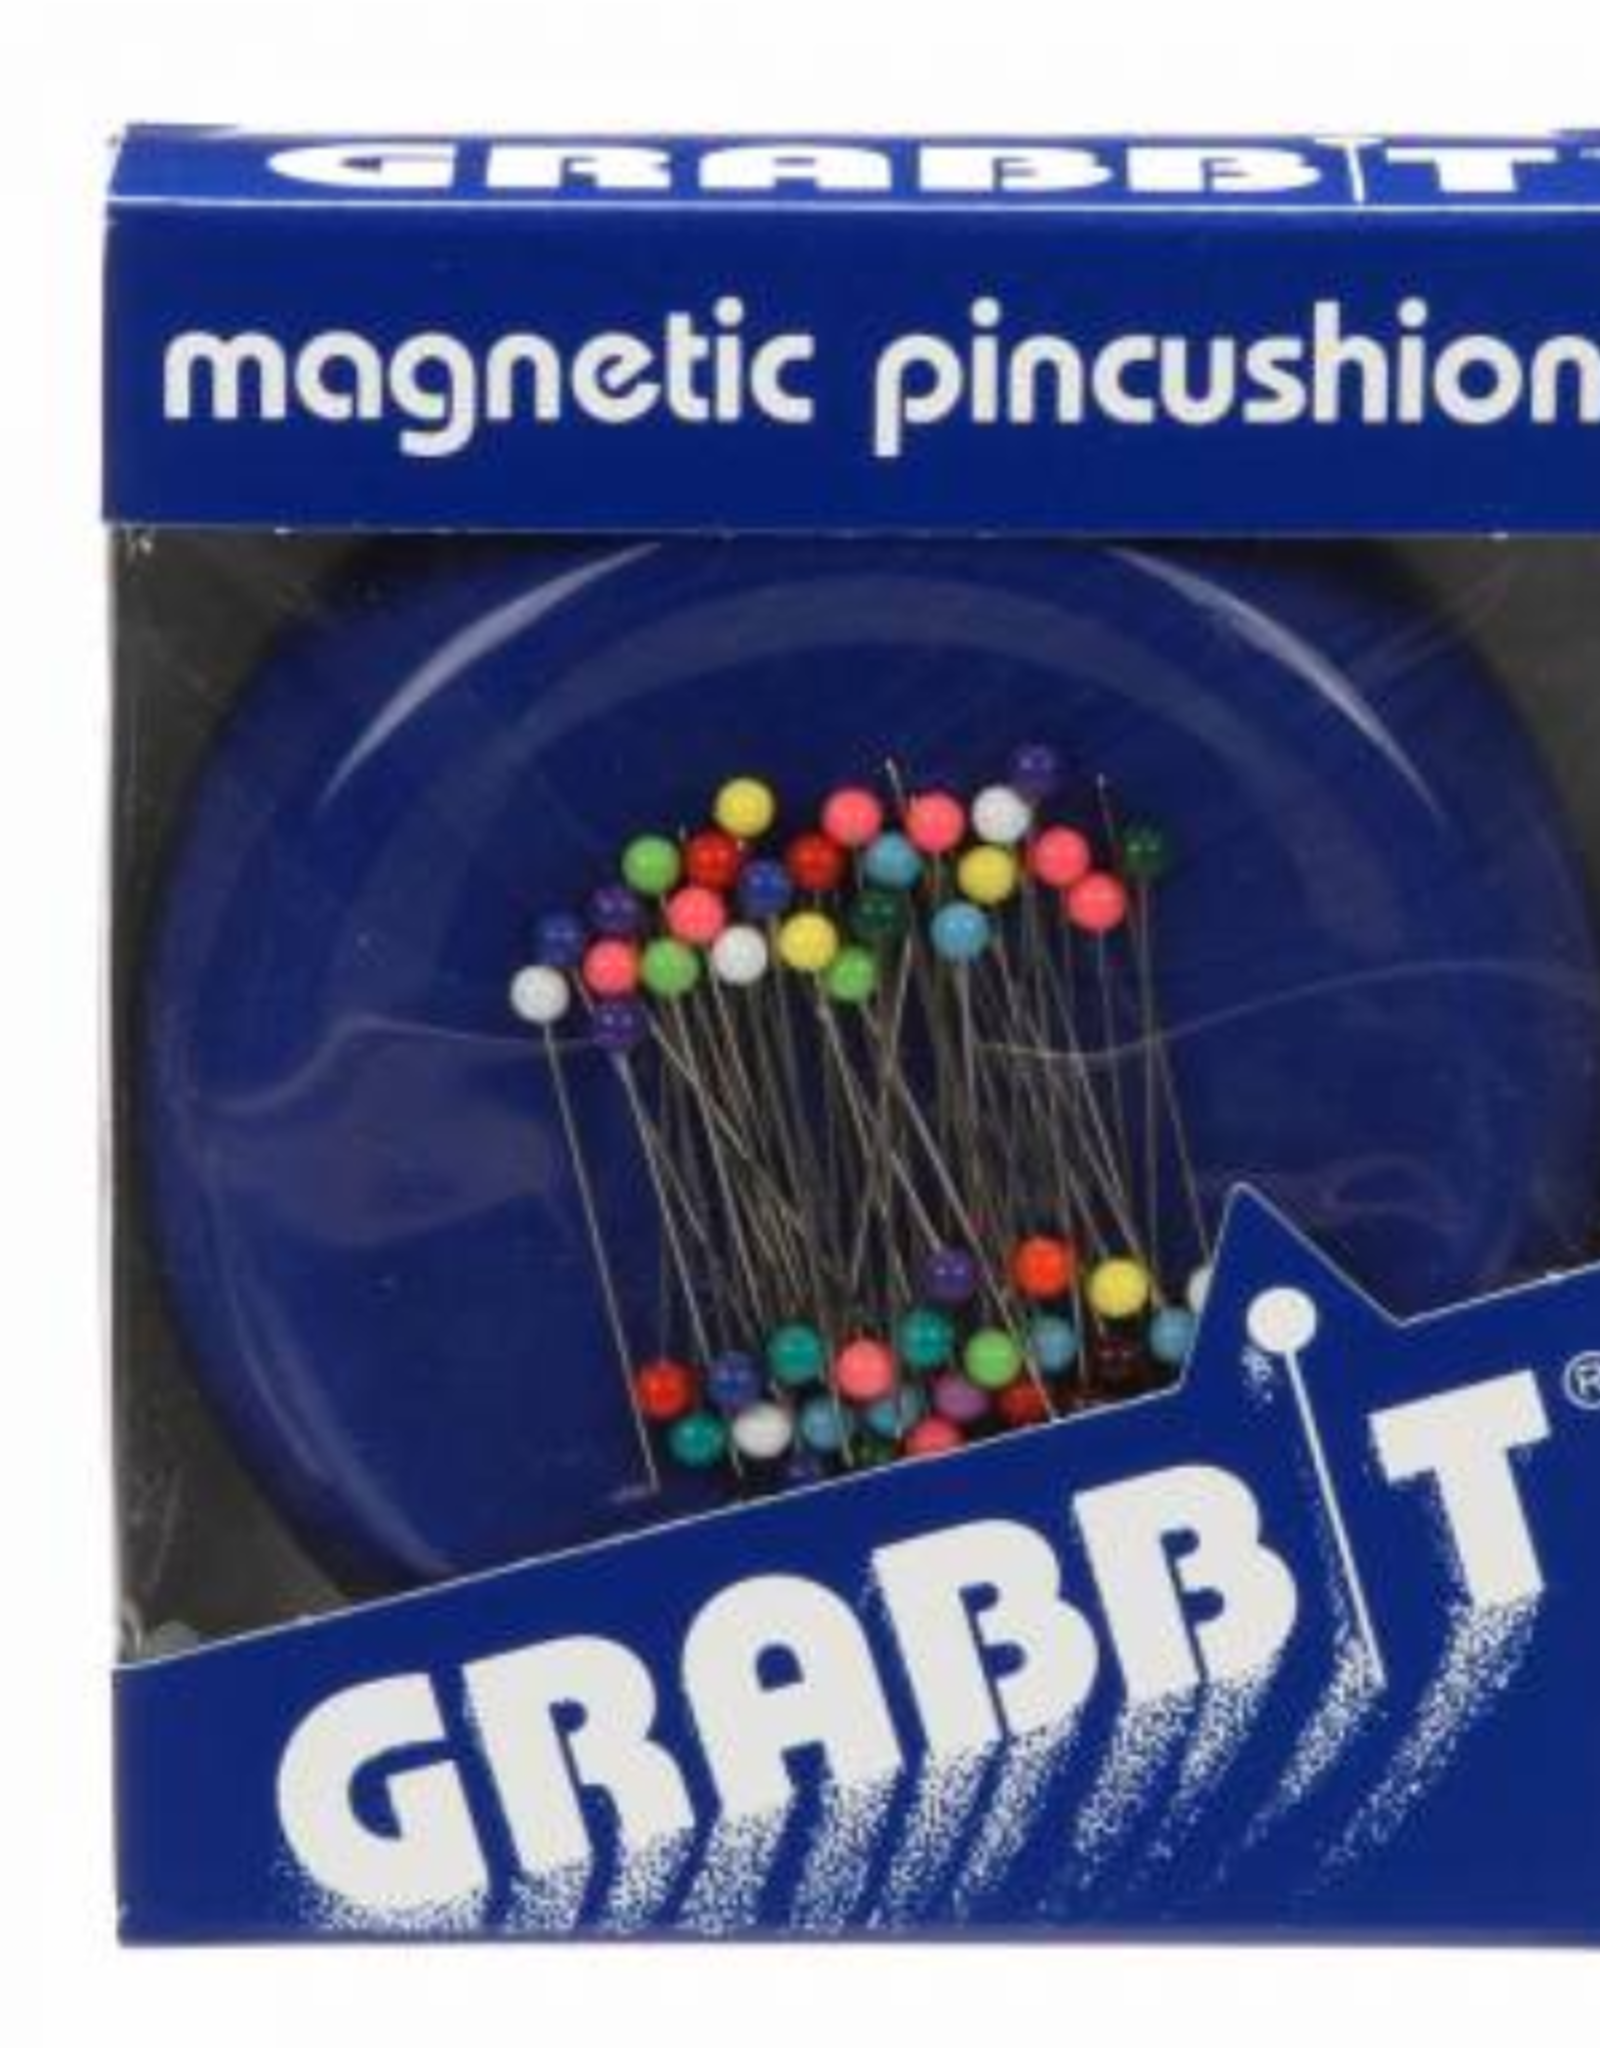 Euro Notions Grabbit Magnetic Pincushion Blue